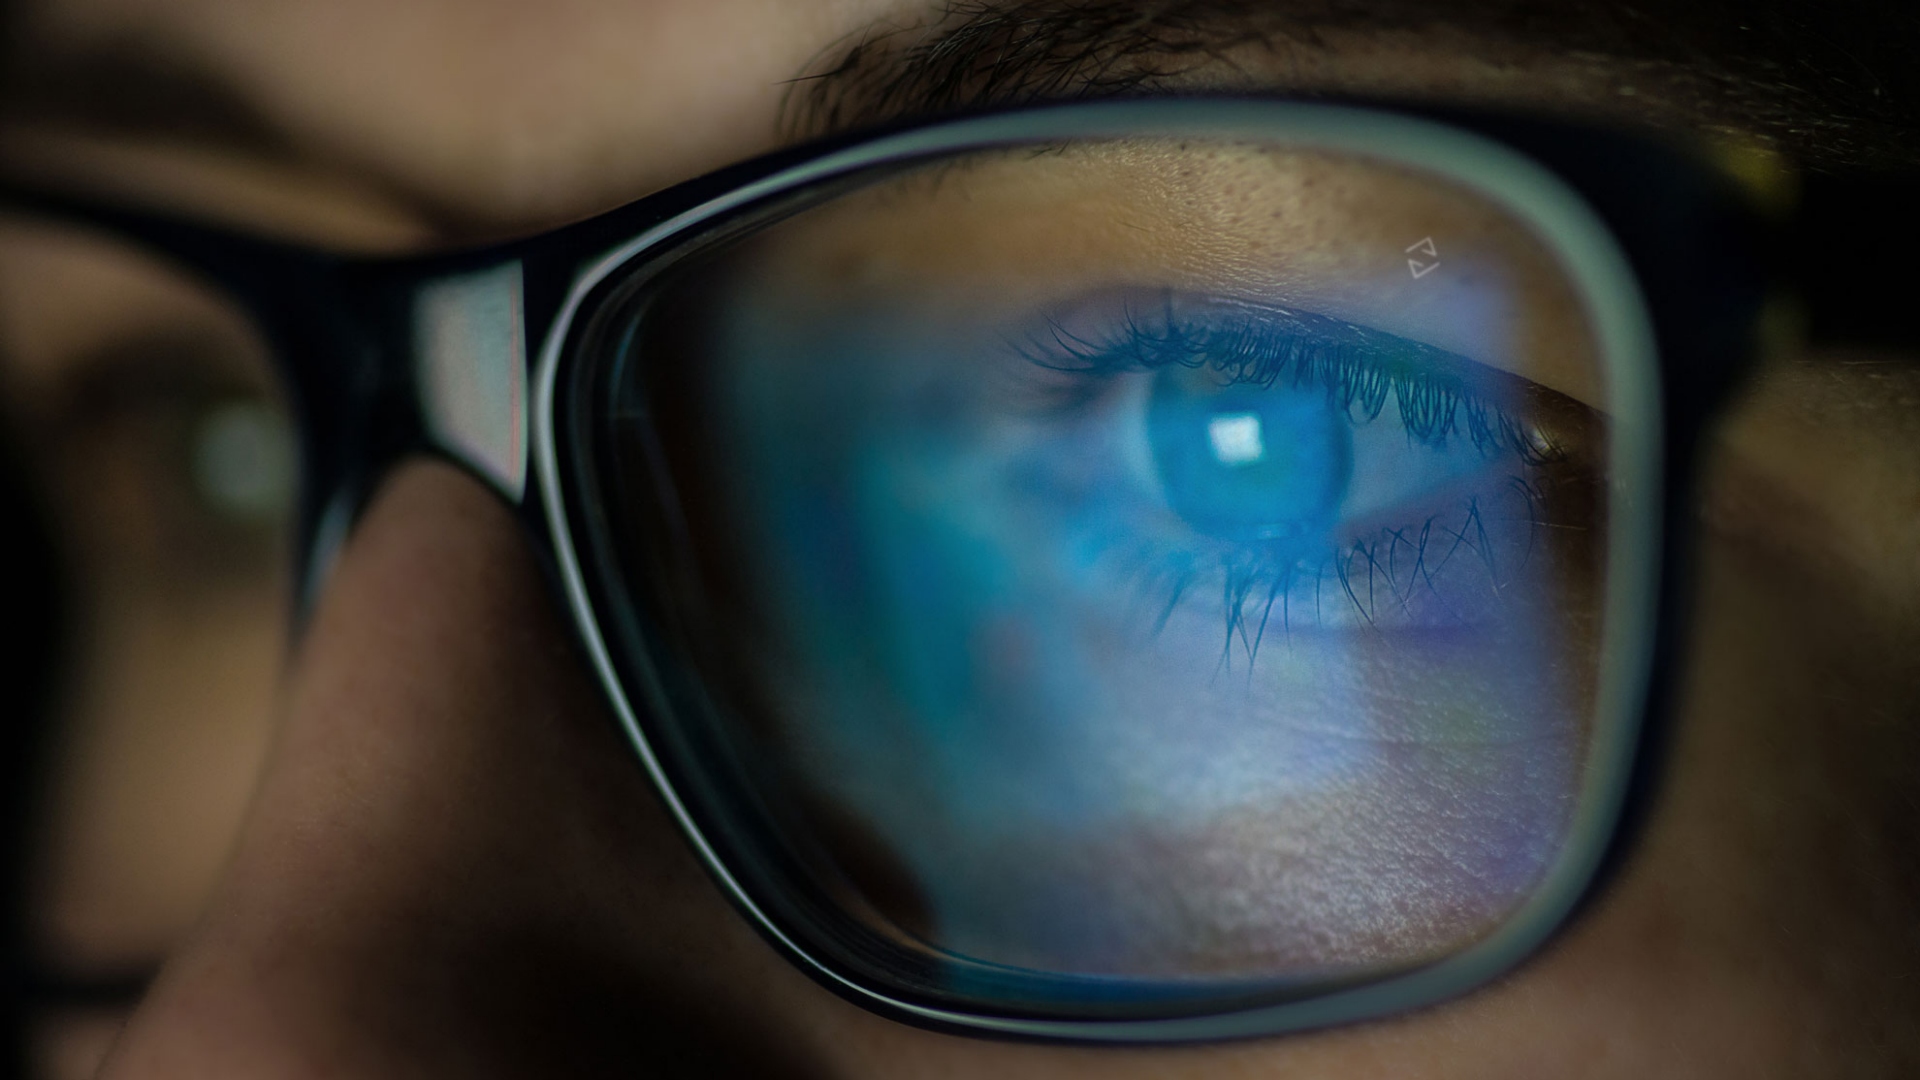 Peripheral vision and eyeglass lenses 